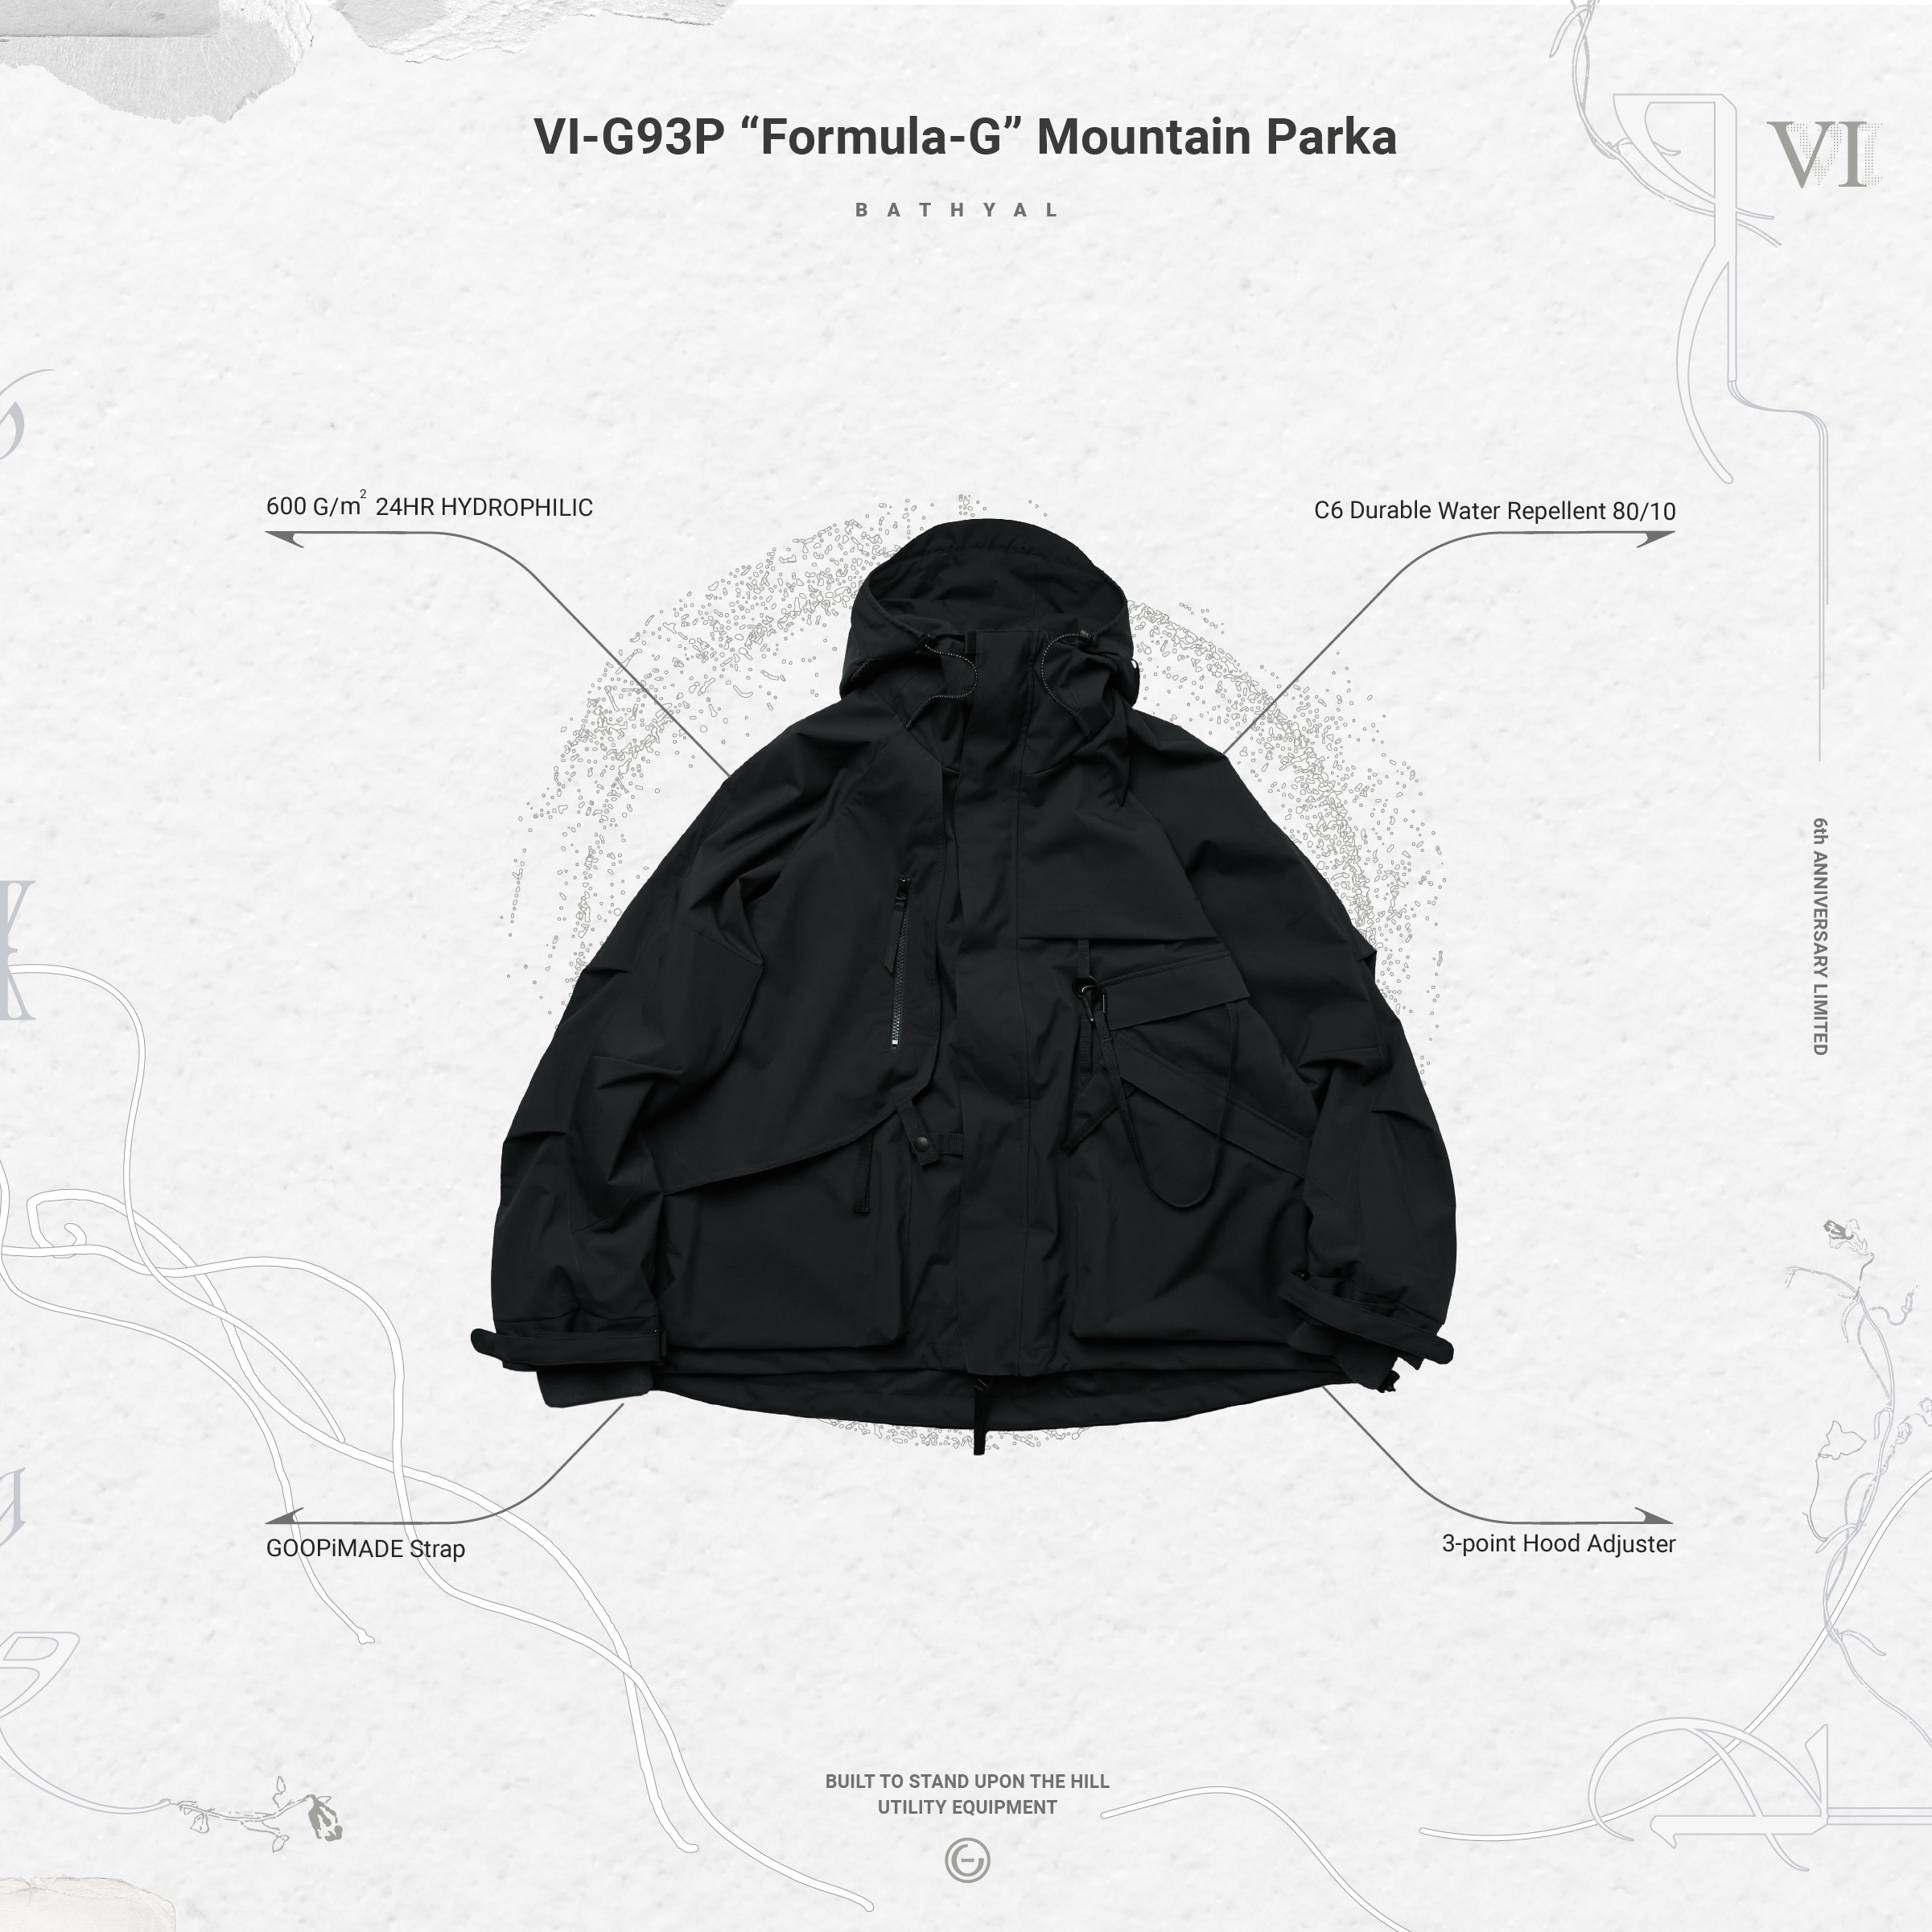 VI-G93P “Formula-G” Mountain Parka - Bathyal